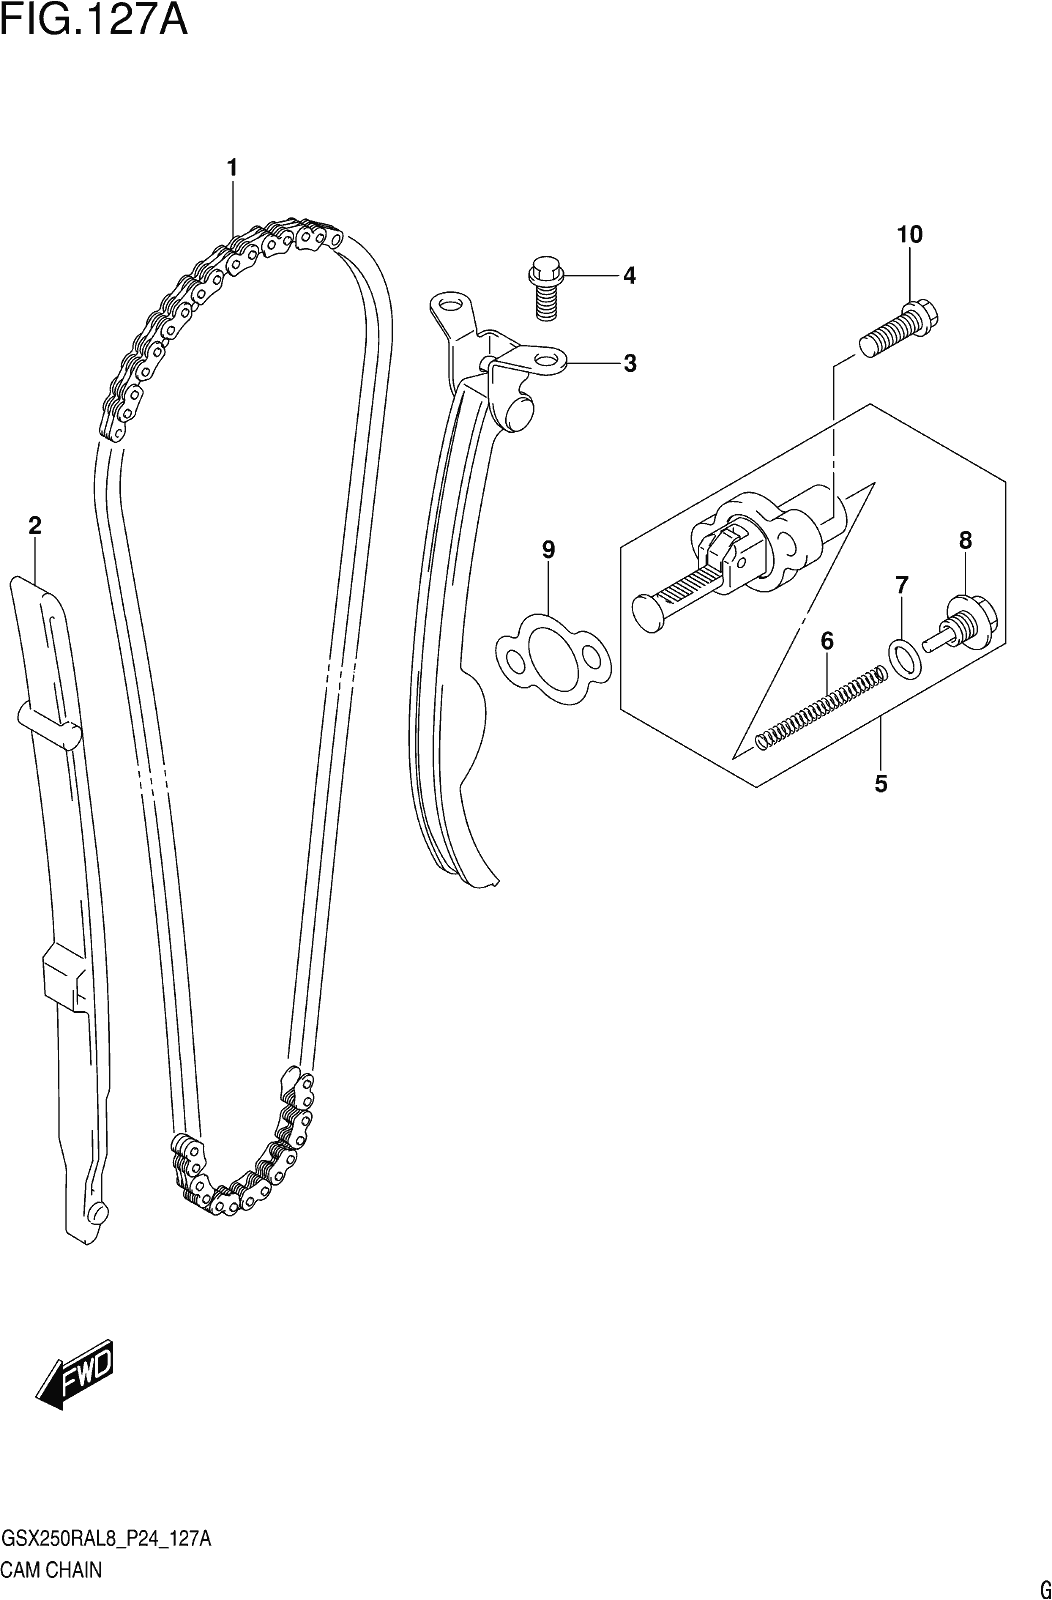 Fig.127a Cam Chain